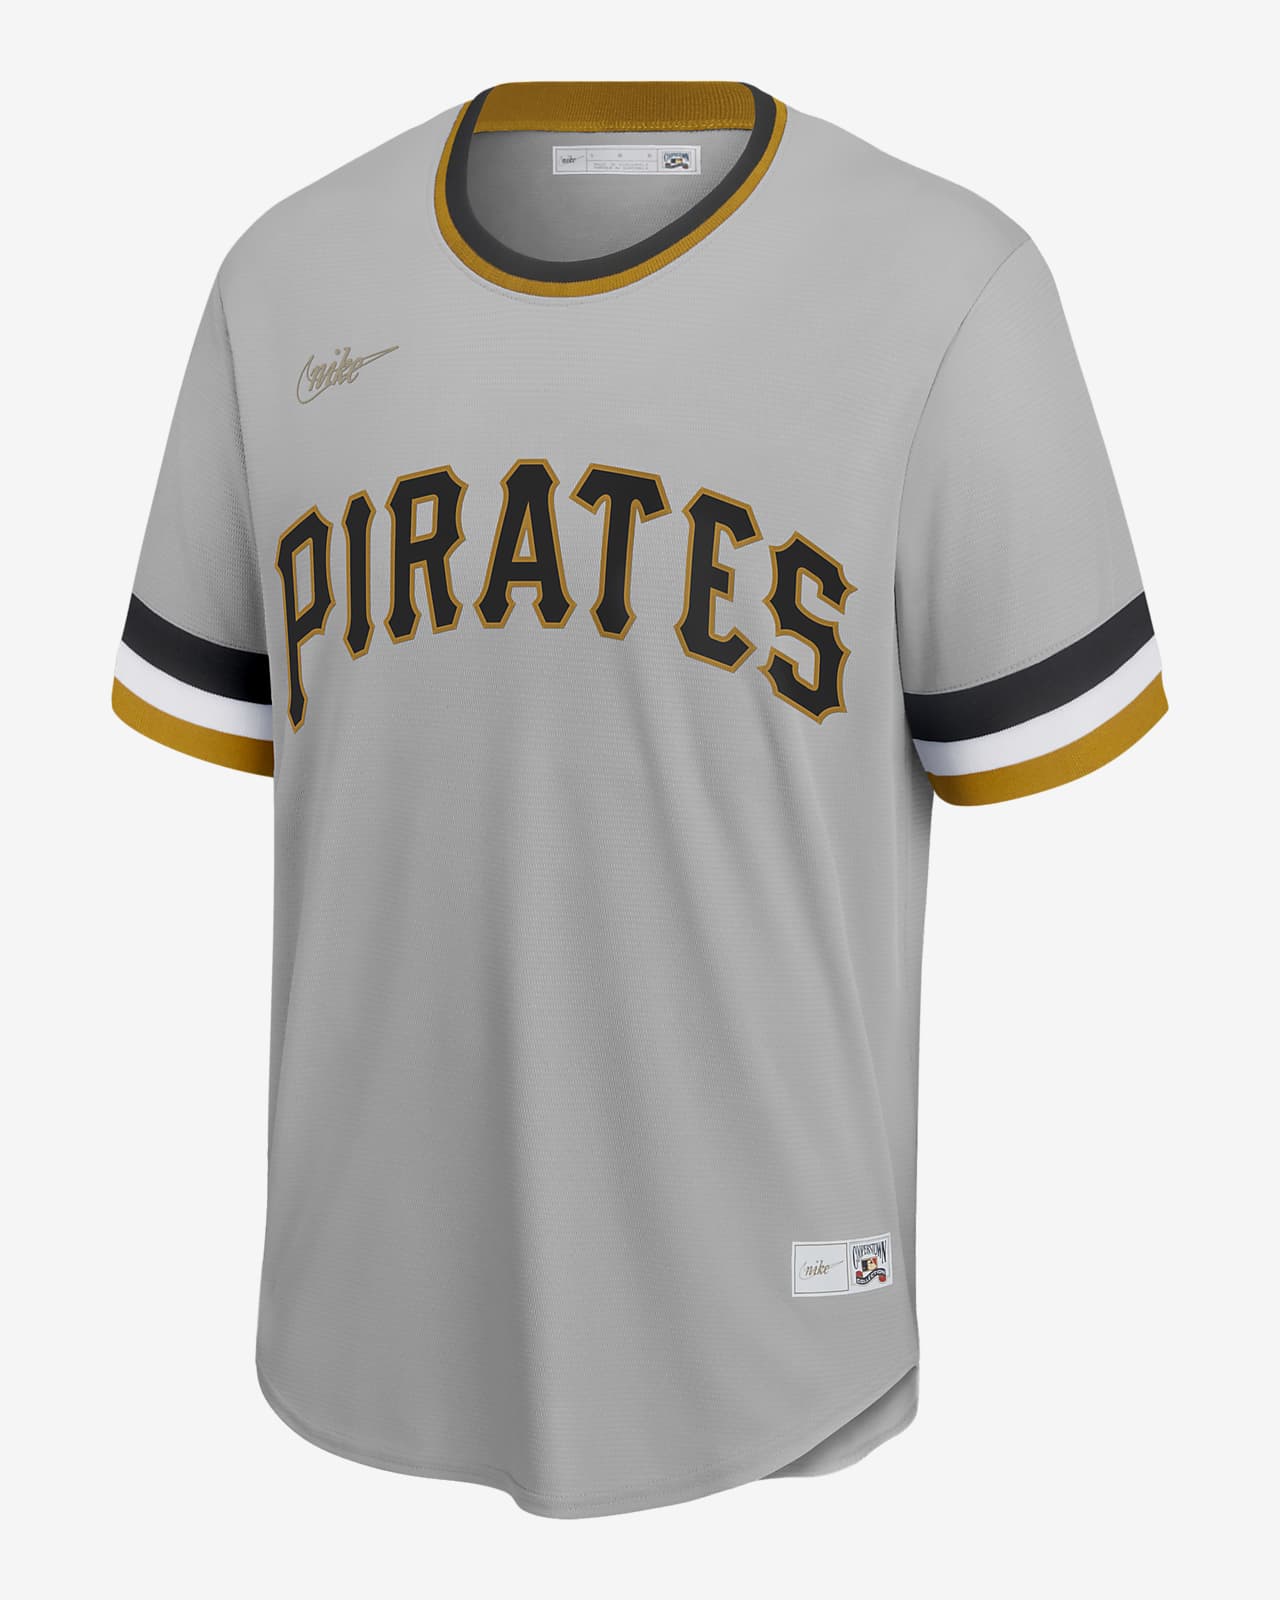 pittsburgh pirates baseball uniforms